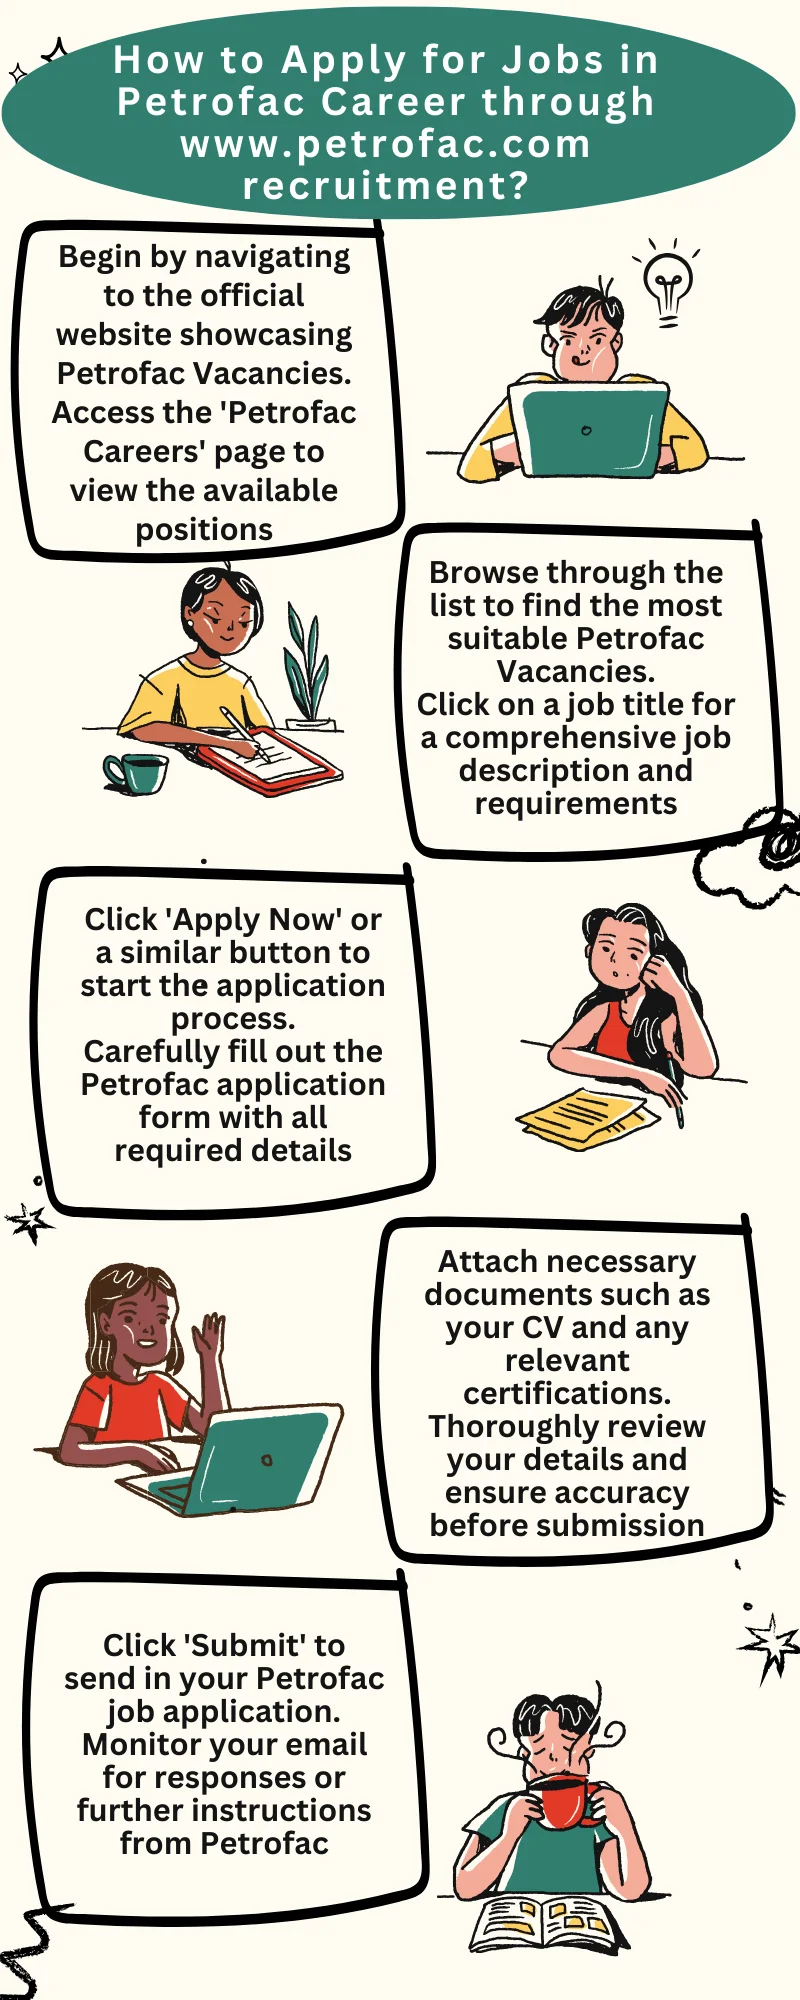 How to Apply for Jobs in Petrofac Career through www.petrofac.com recruitment?